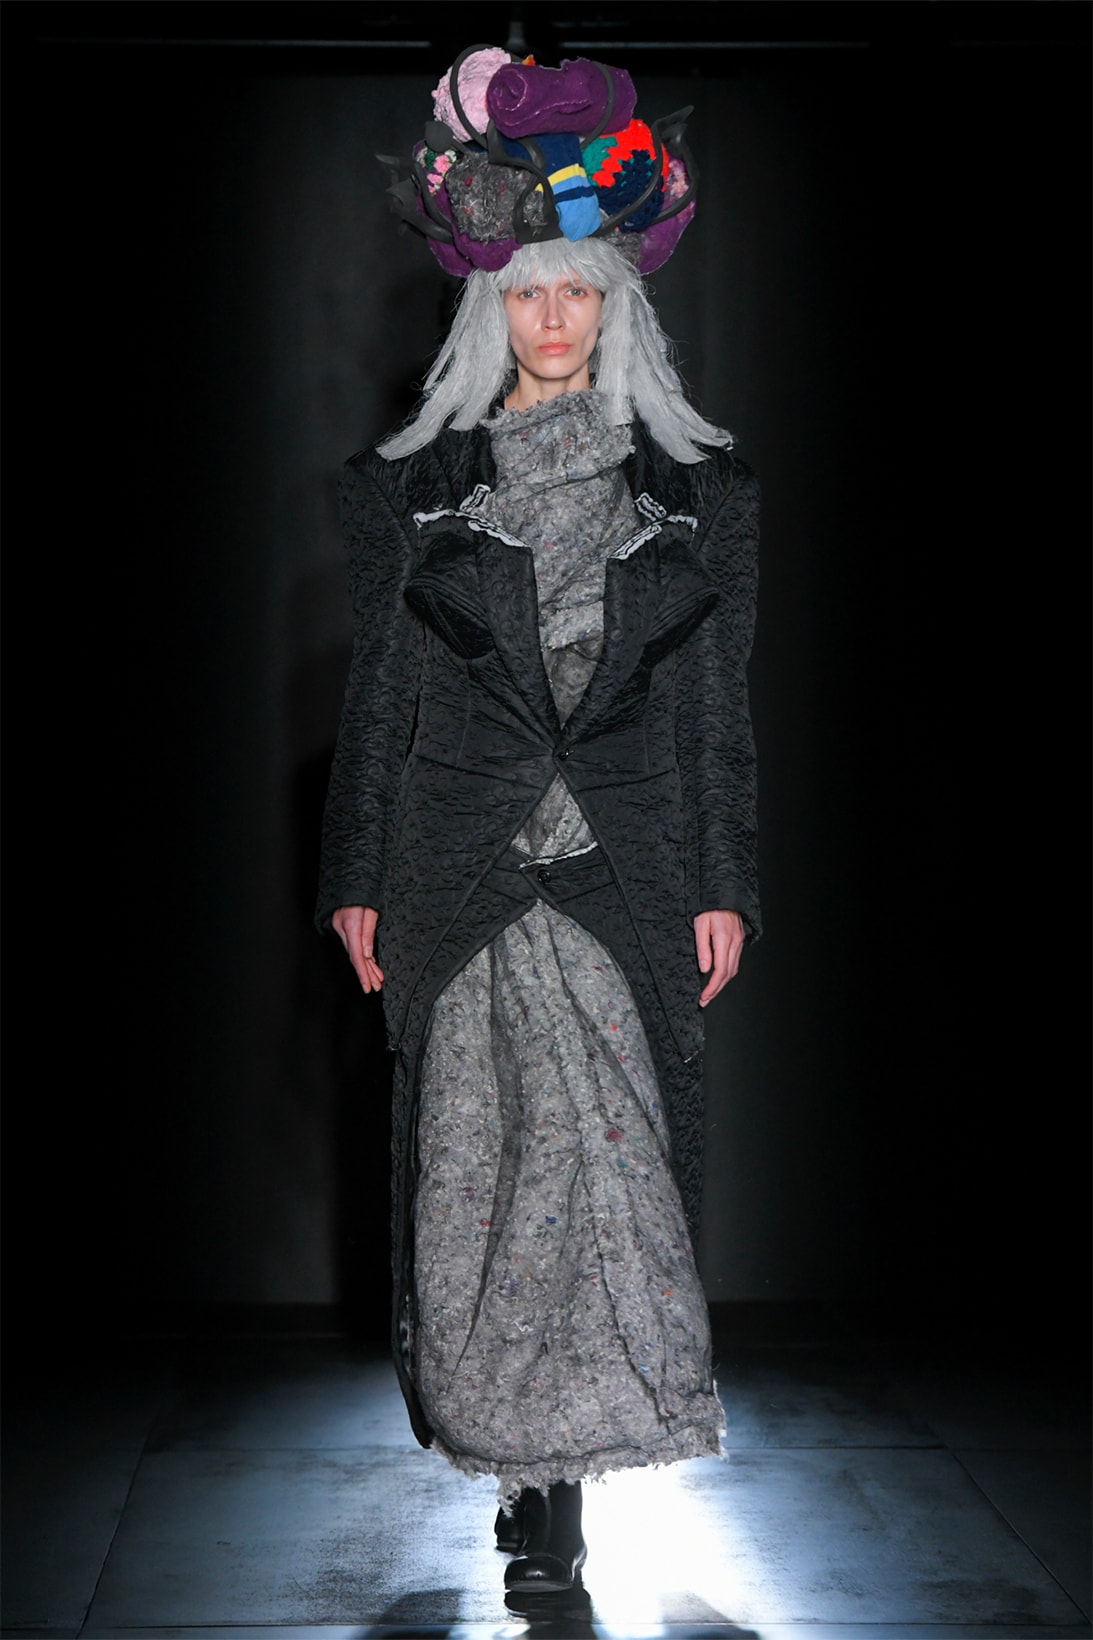 comme des garcons fall winter collection salomon pulsar platform tokyo runway show suit dress headpiece black gray